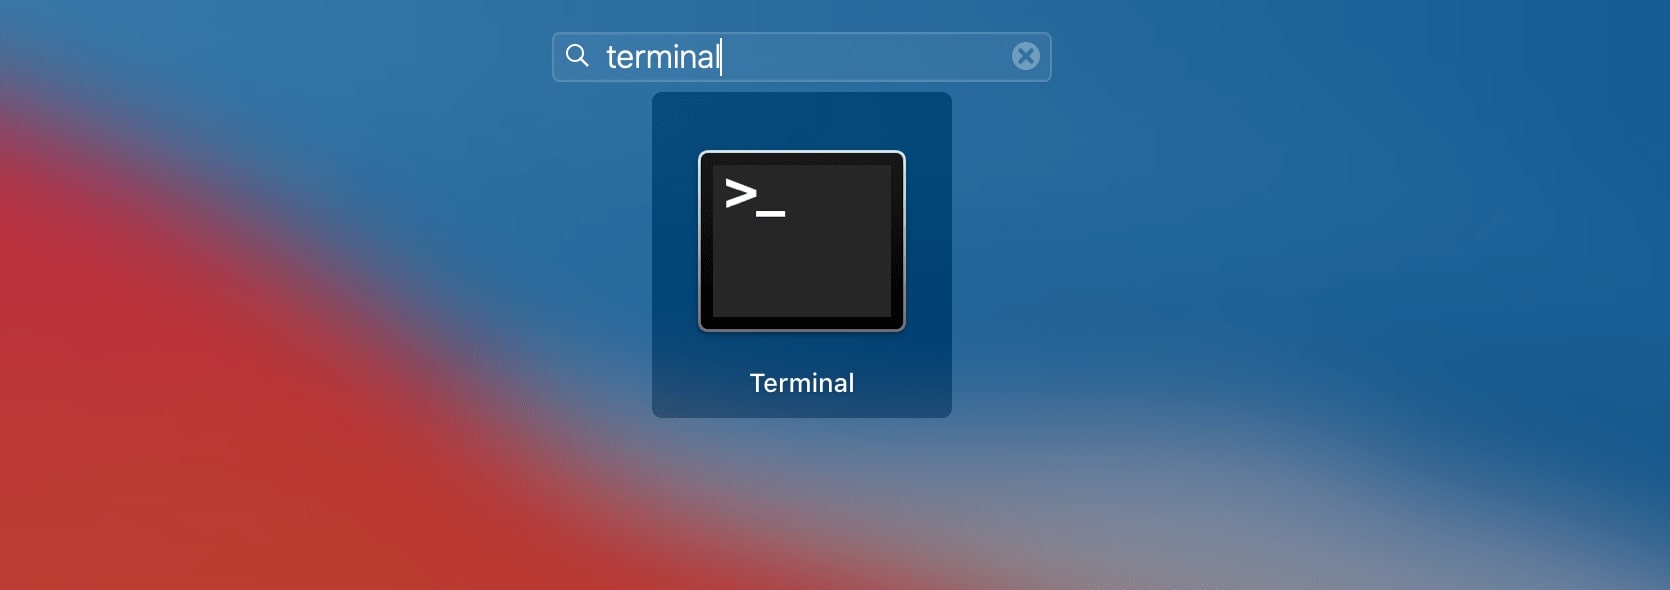 Image of terminal app on Mac OS